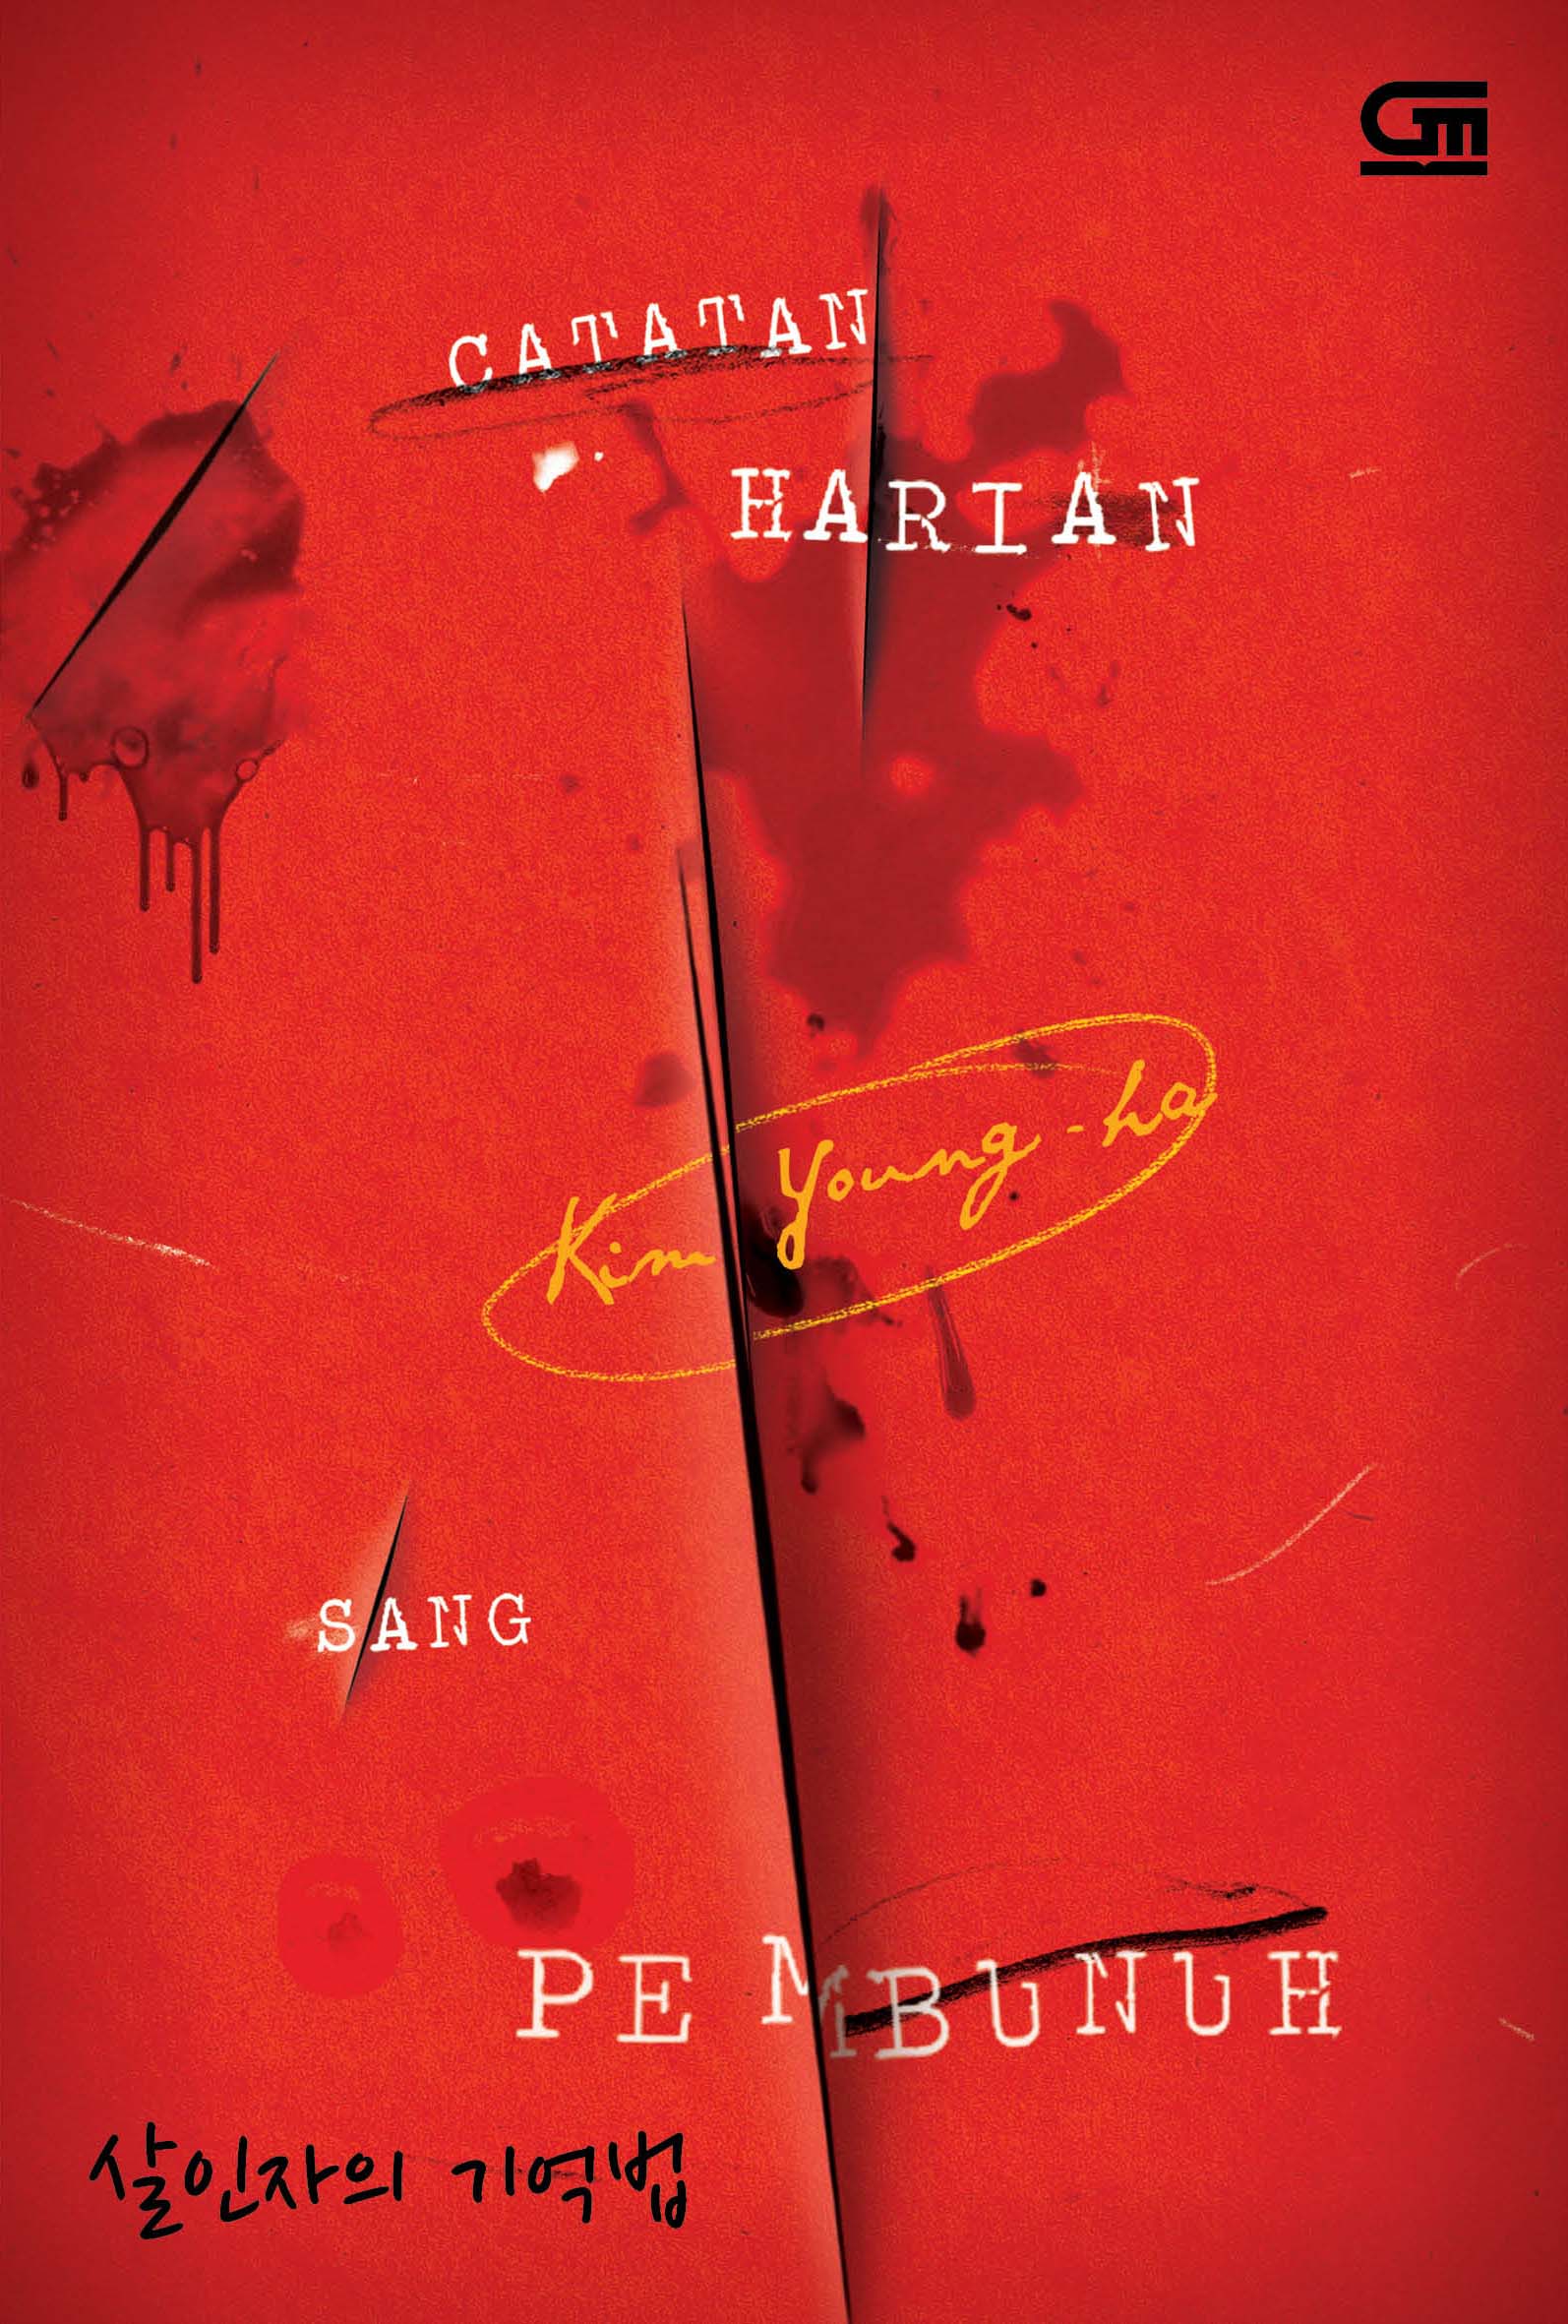 Catatan Harian Sang Pembunuh (Diary of a Murderer)